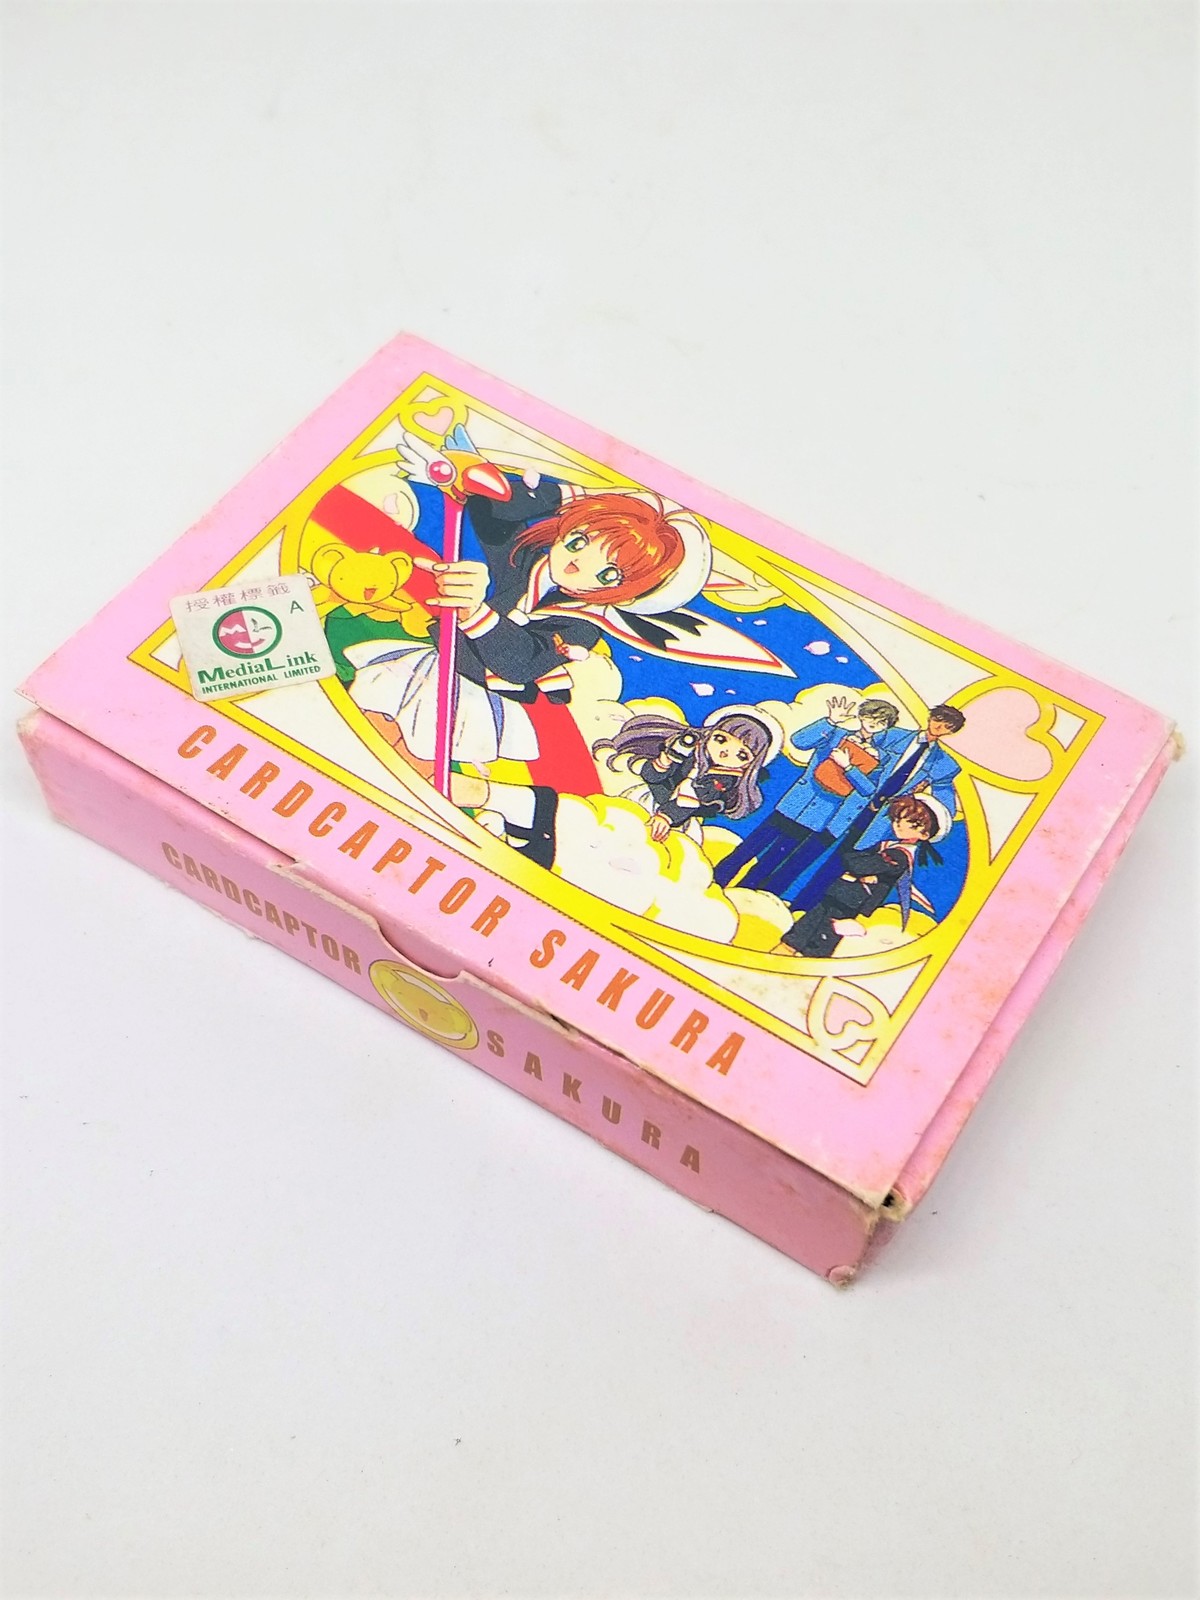 Cardcaptor Sakura Playing Cards - 90s CLAMP Japanese Anime Manga Not For Sale - $31.90